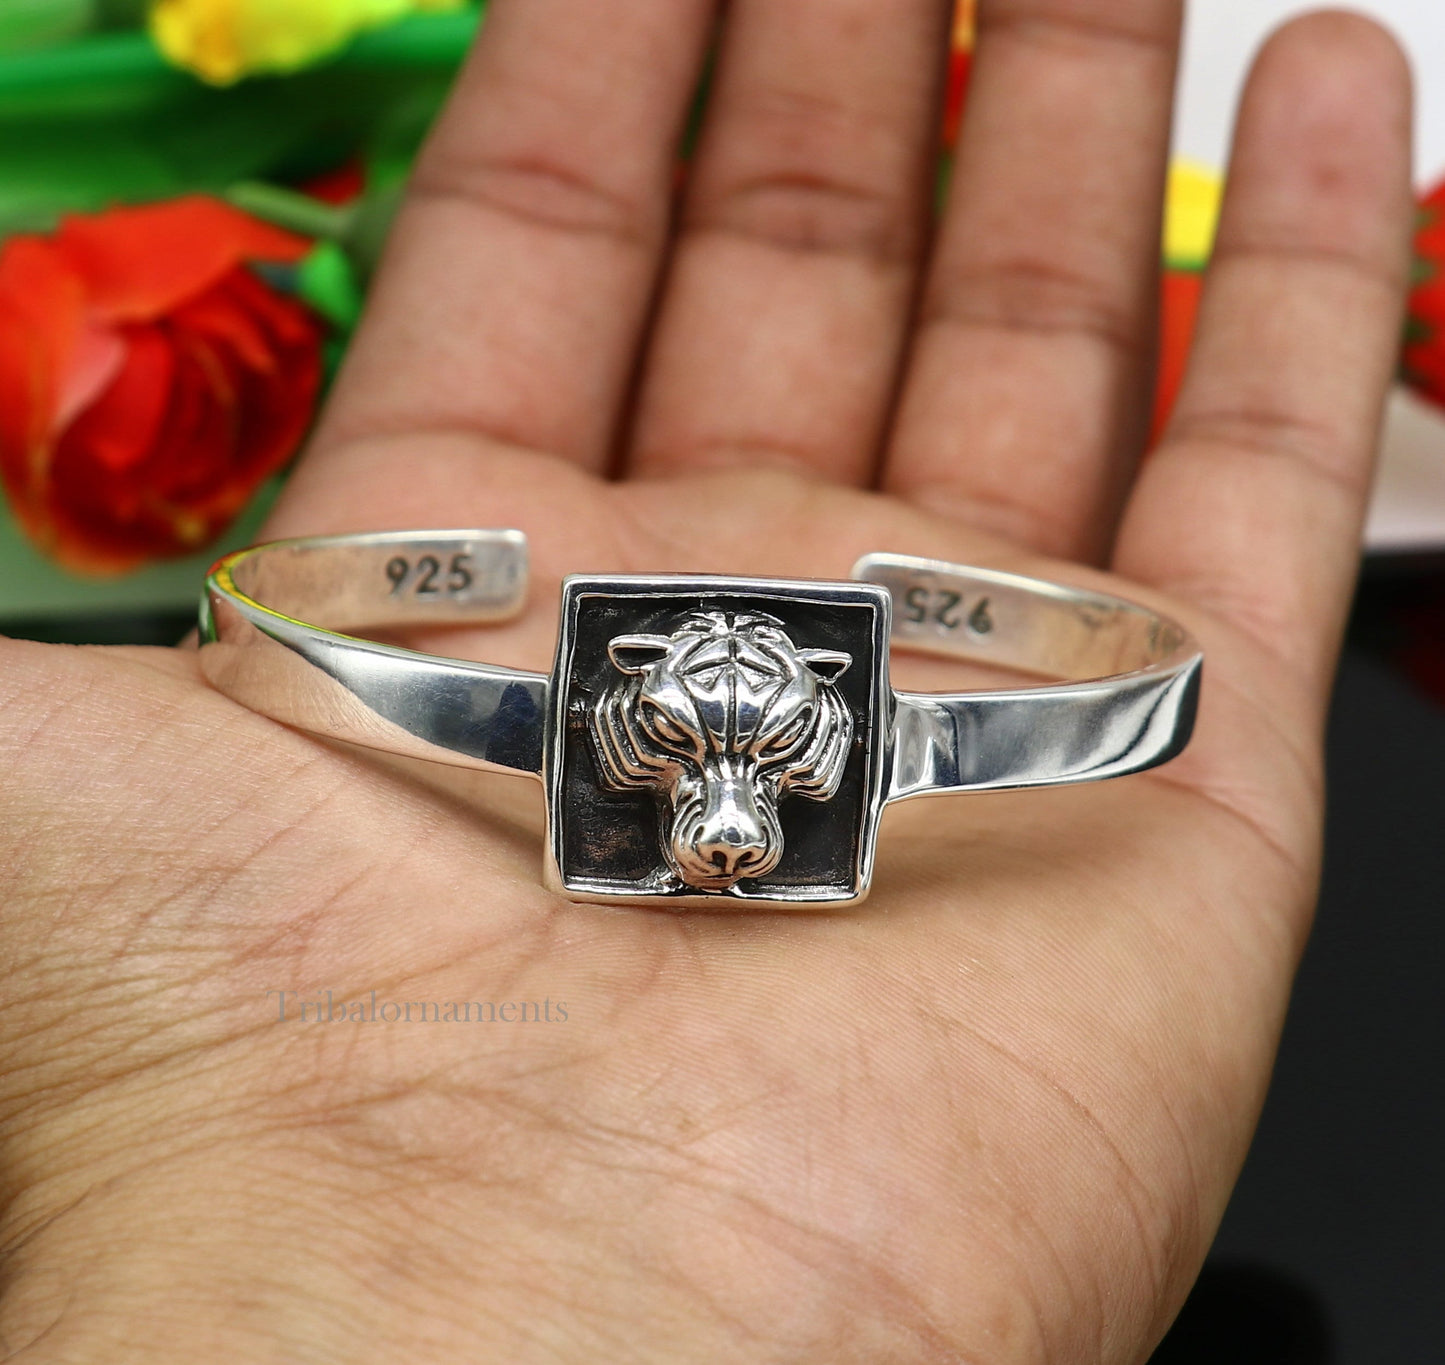 925 sterling silver or Gold polished handmade lion face design adjustable bangle bracelet kada best unisex gifting jewelry India Gnsk368 - TRIBAL ORNAMENTS